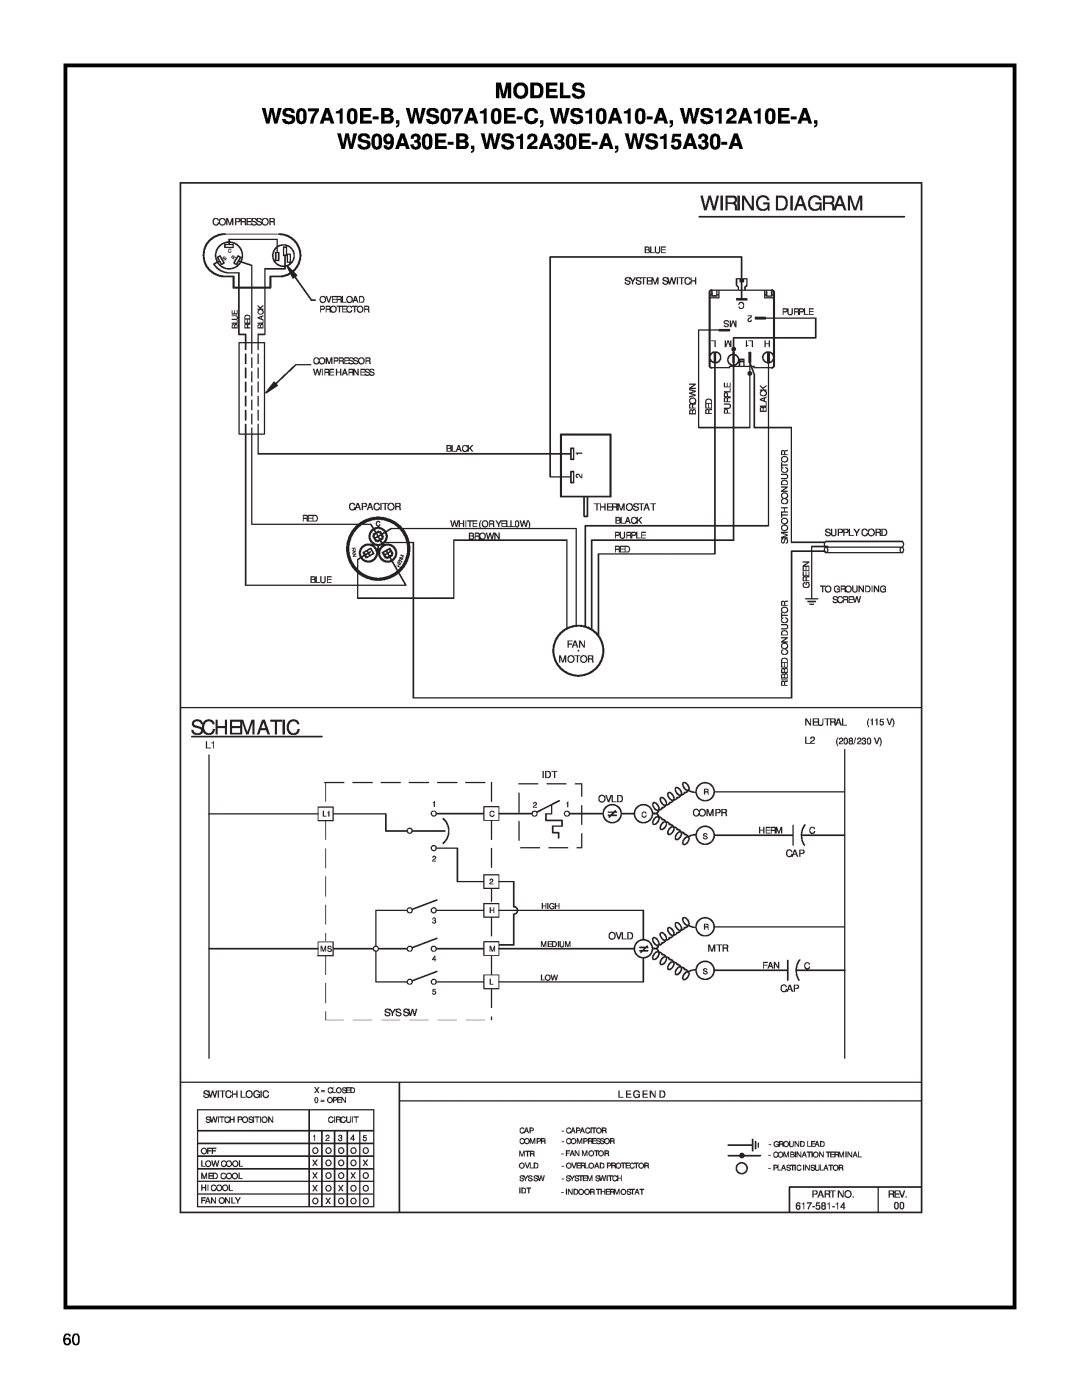 Friedrich 2003 service manual Wiring Diagram, Schematic, Models, WS07A10E-B, WS07A10E-C, WS10A10-A, WS12A10E-A 